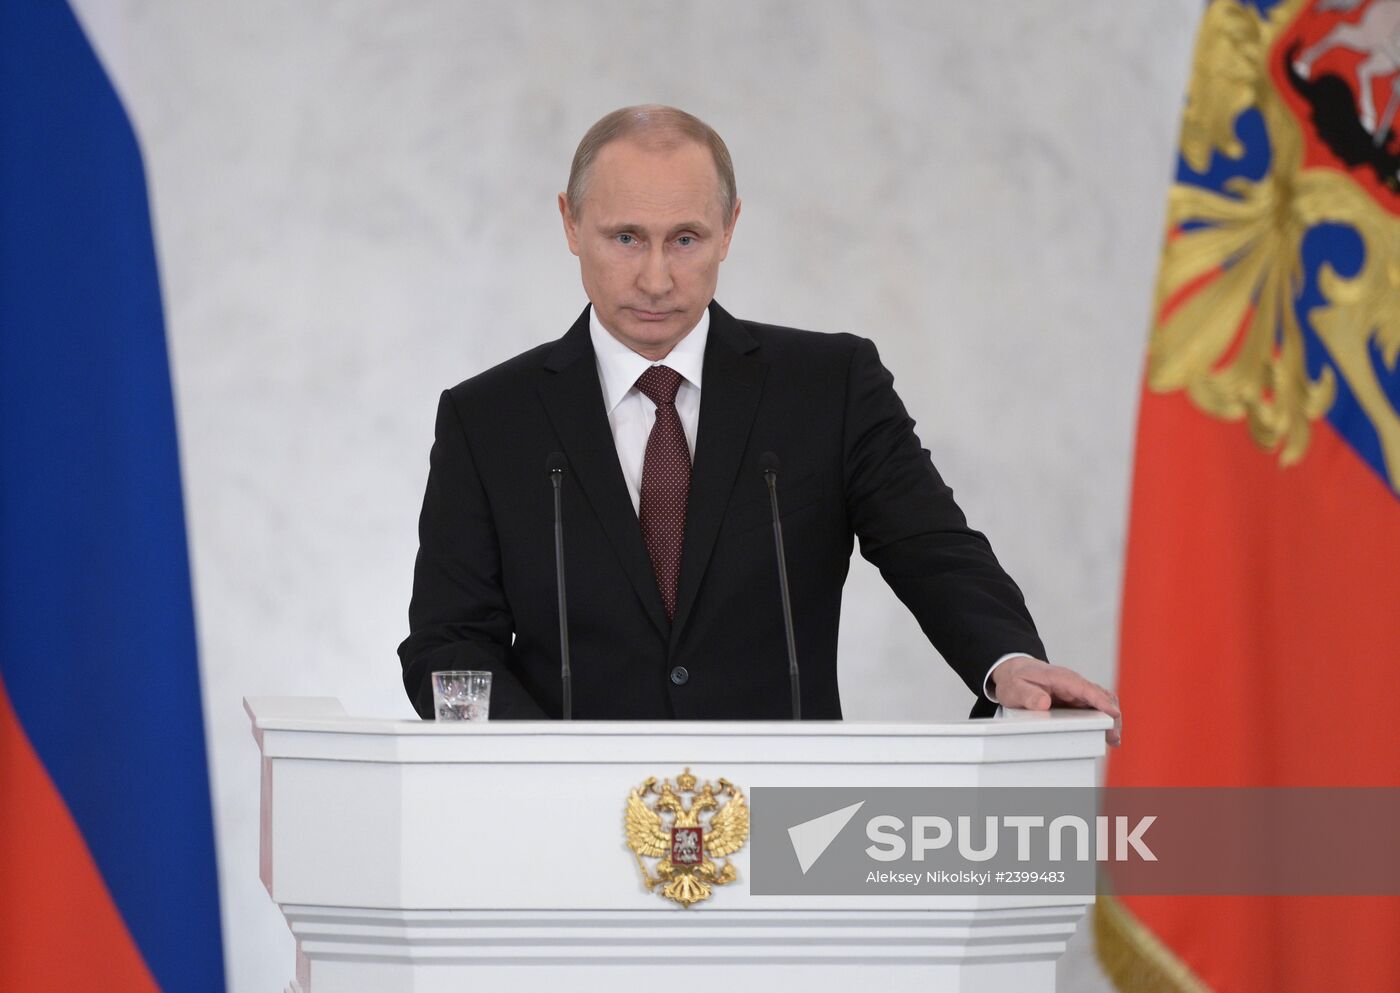 Vladimir Putin's statement on Crimea's integration with Russia